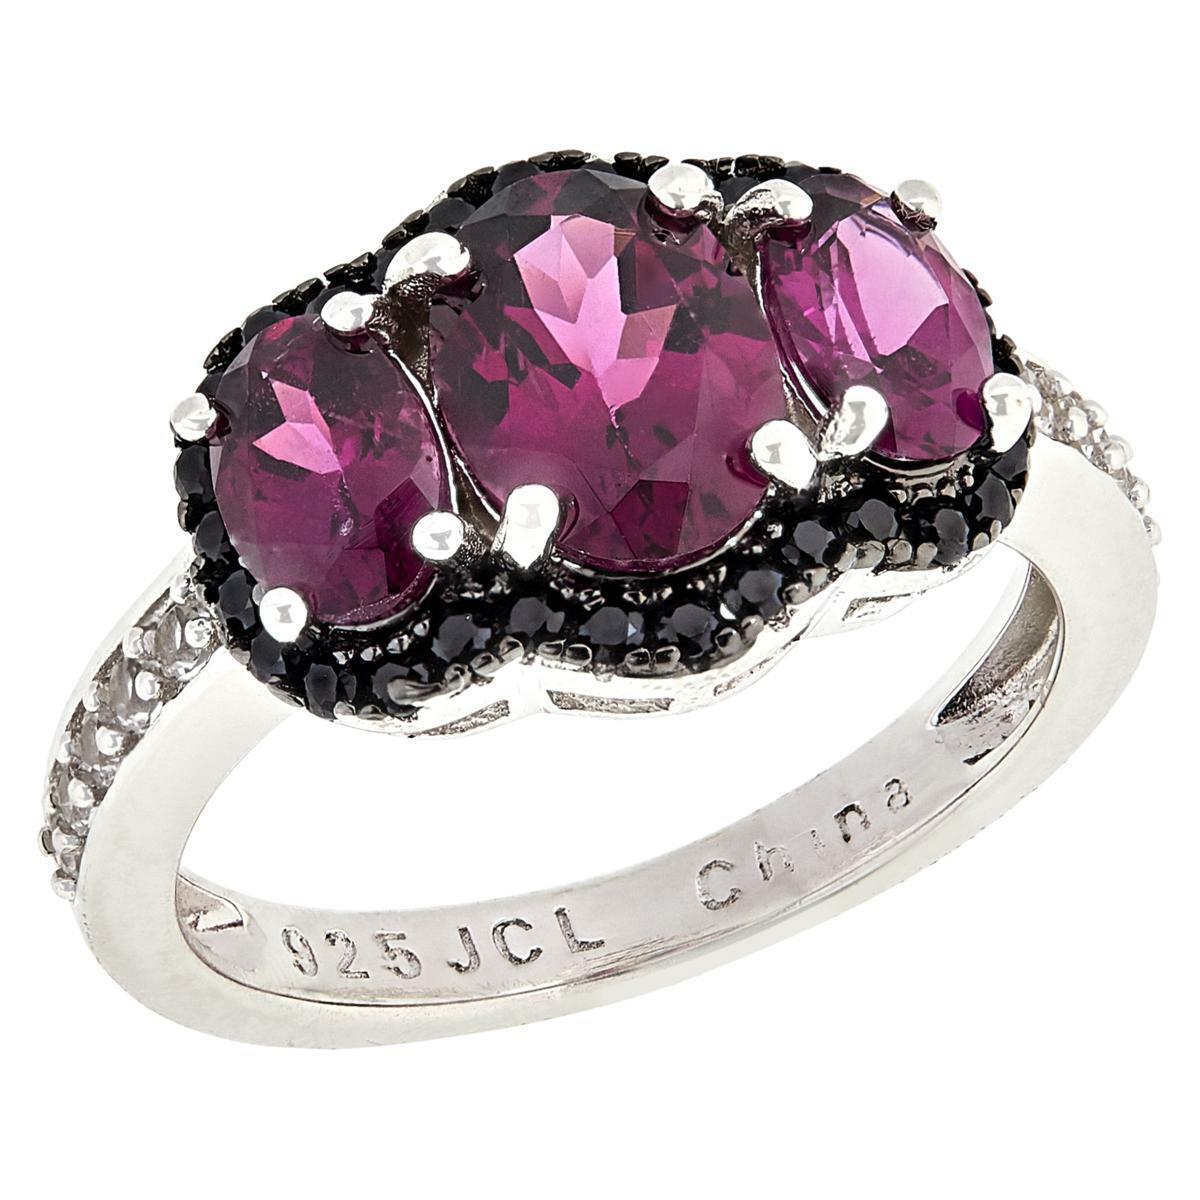 Colleen Lopez Sterling Silver Oval Purple Garnet Gemstone 3 Stone Ring, Size 6